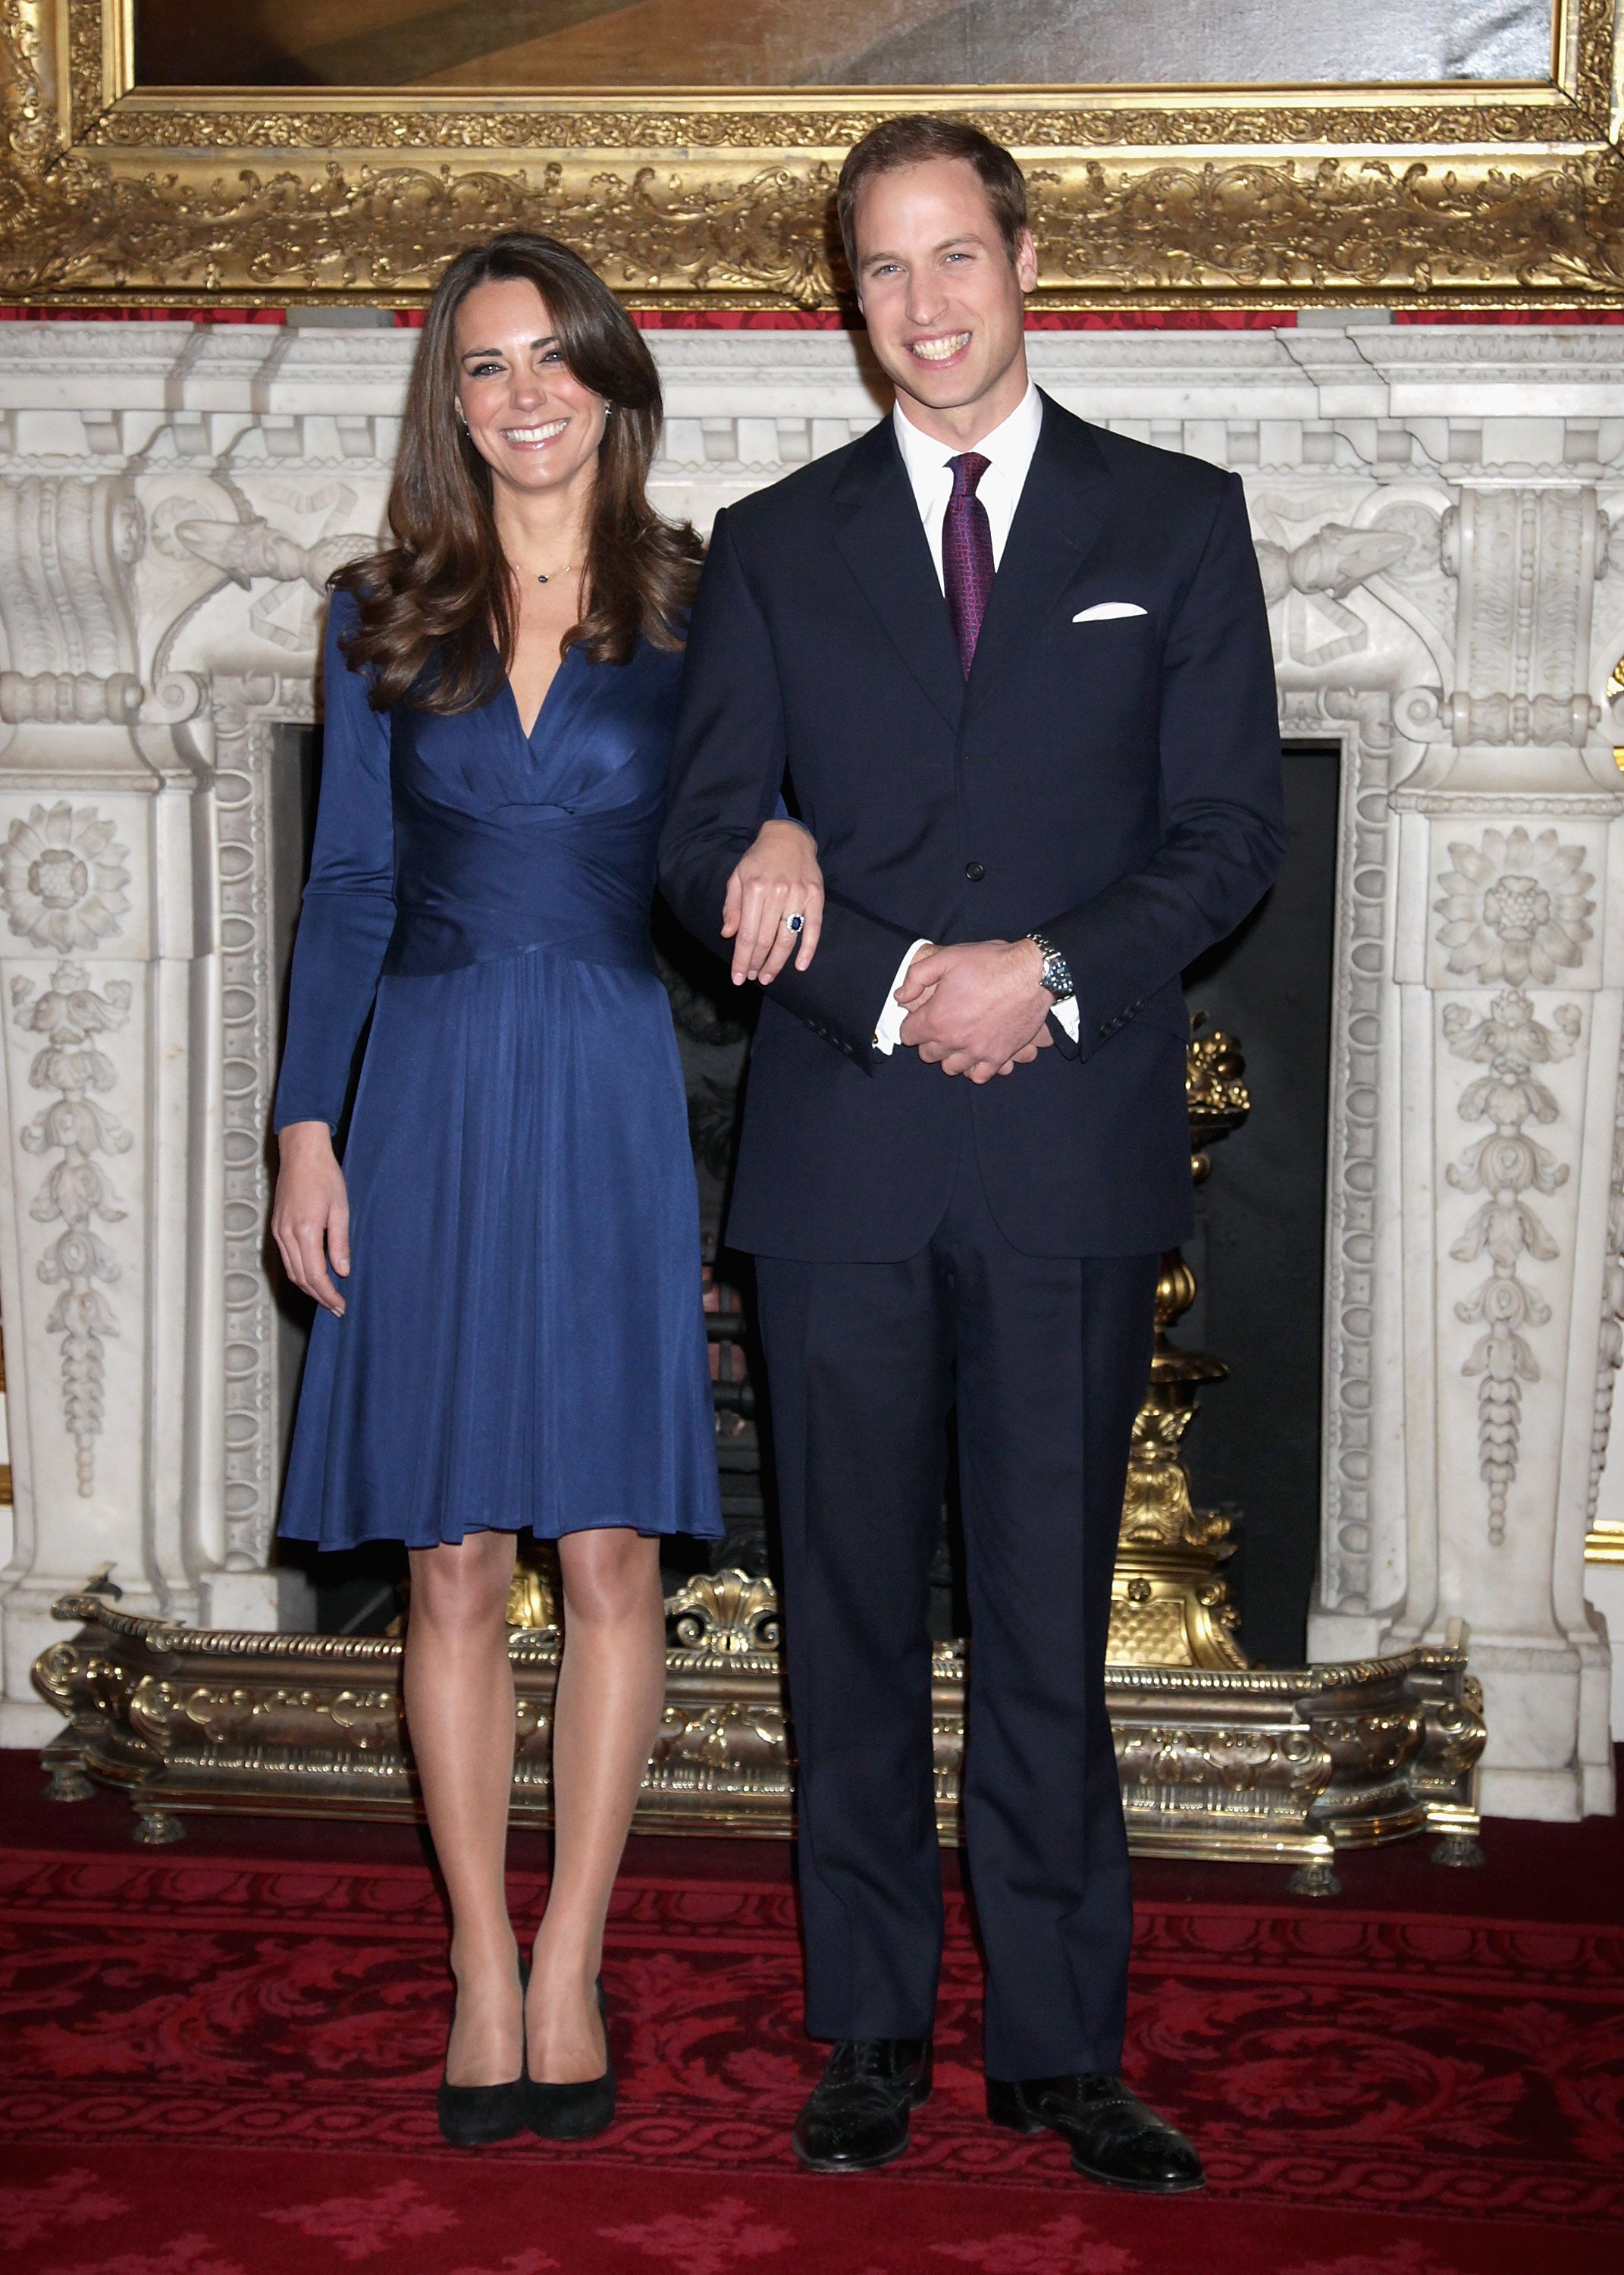 Prinz William und Kate Middleton in den Staatsgemächern des St. James Palace am 16. November 2010 in London, England. | Quelle: Getty Images